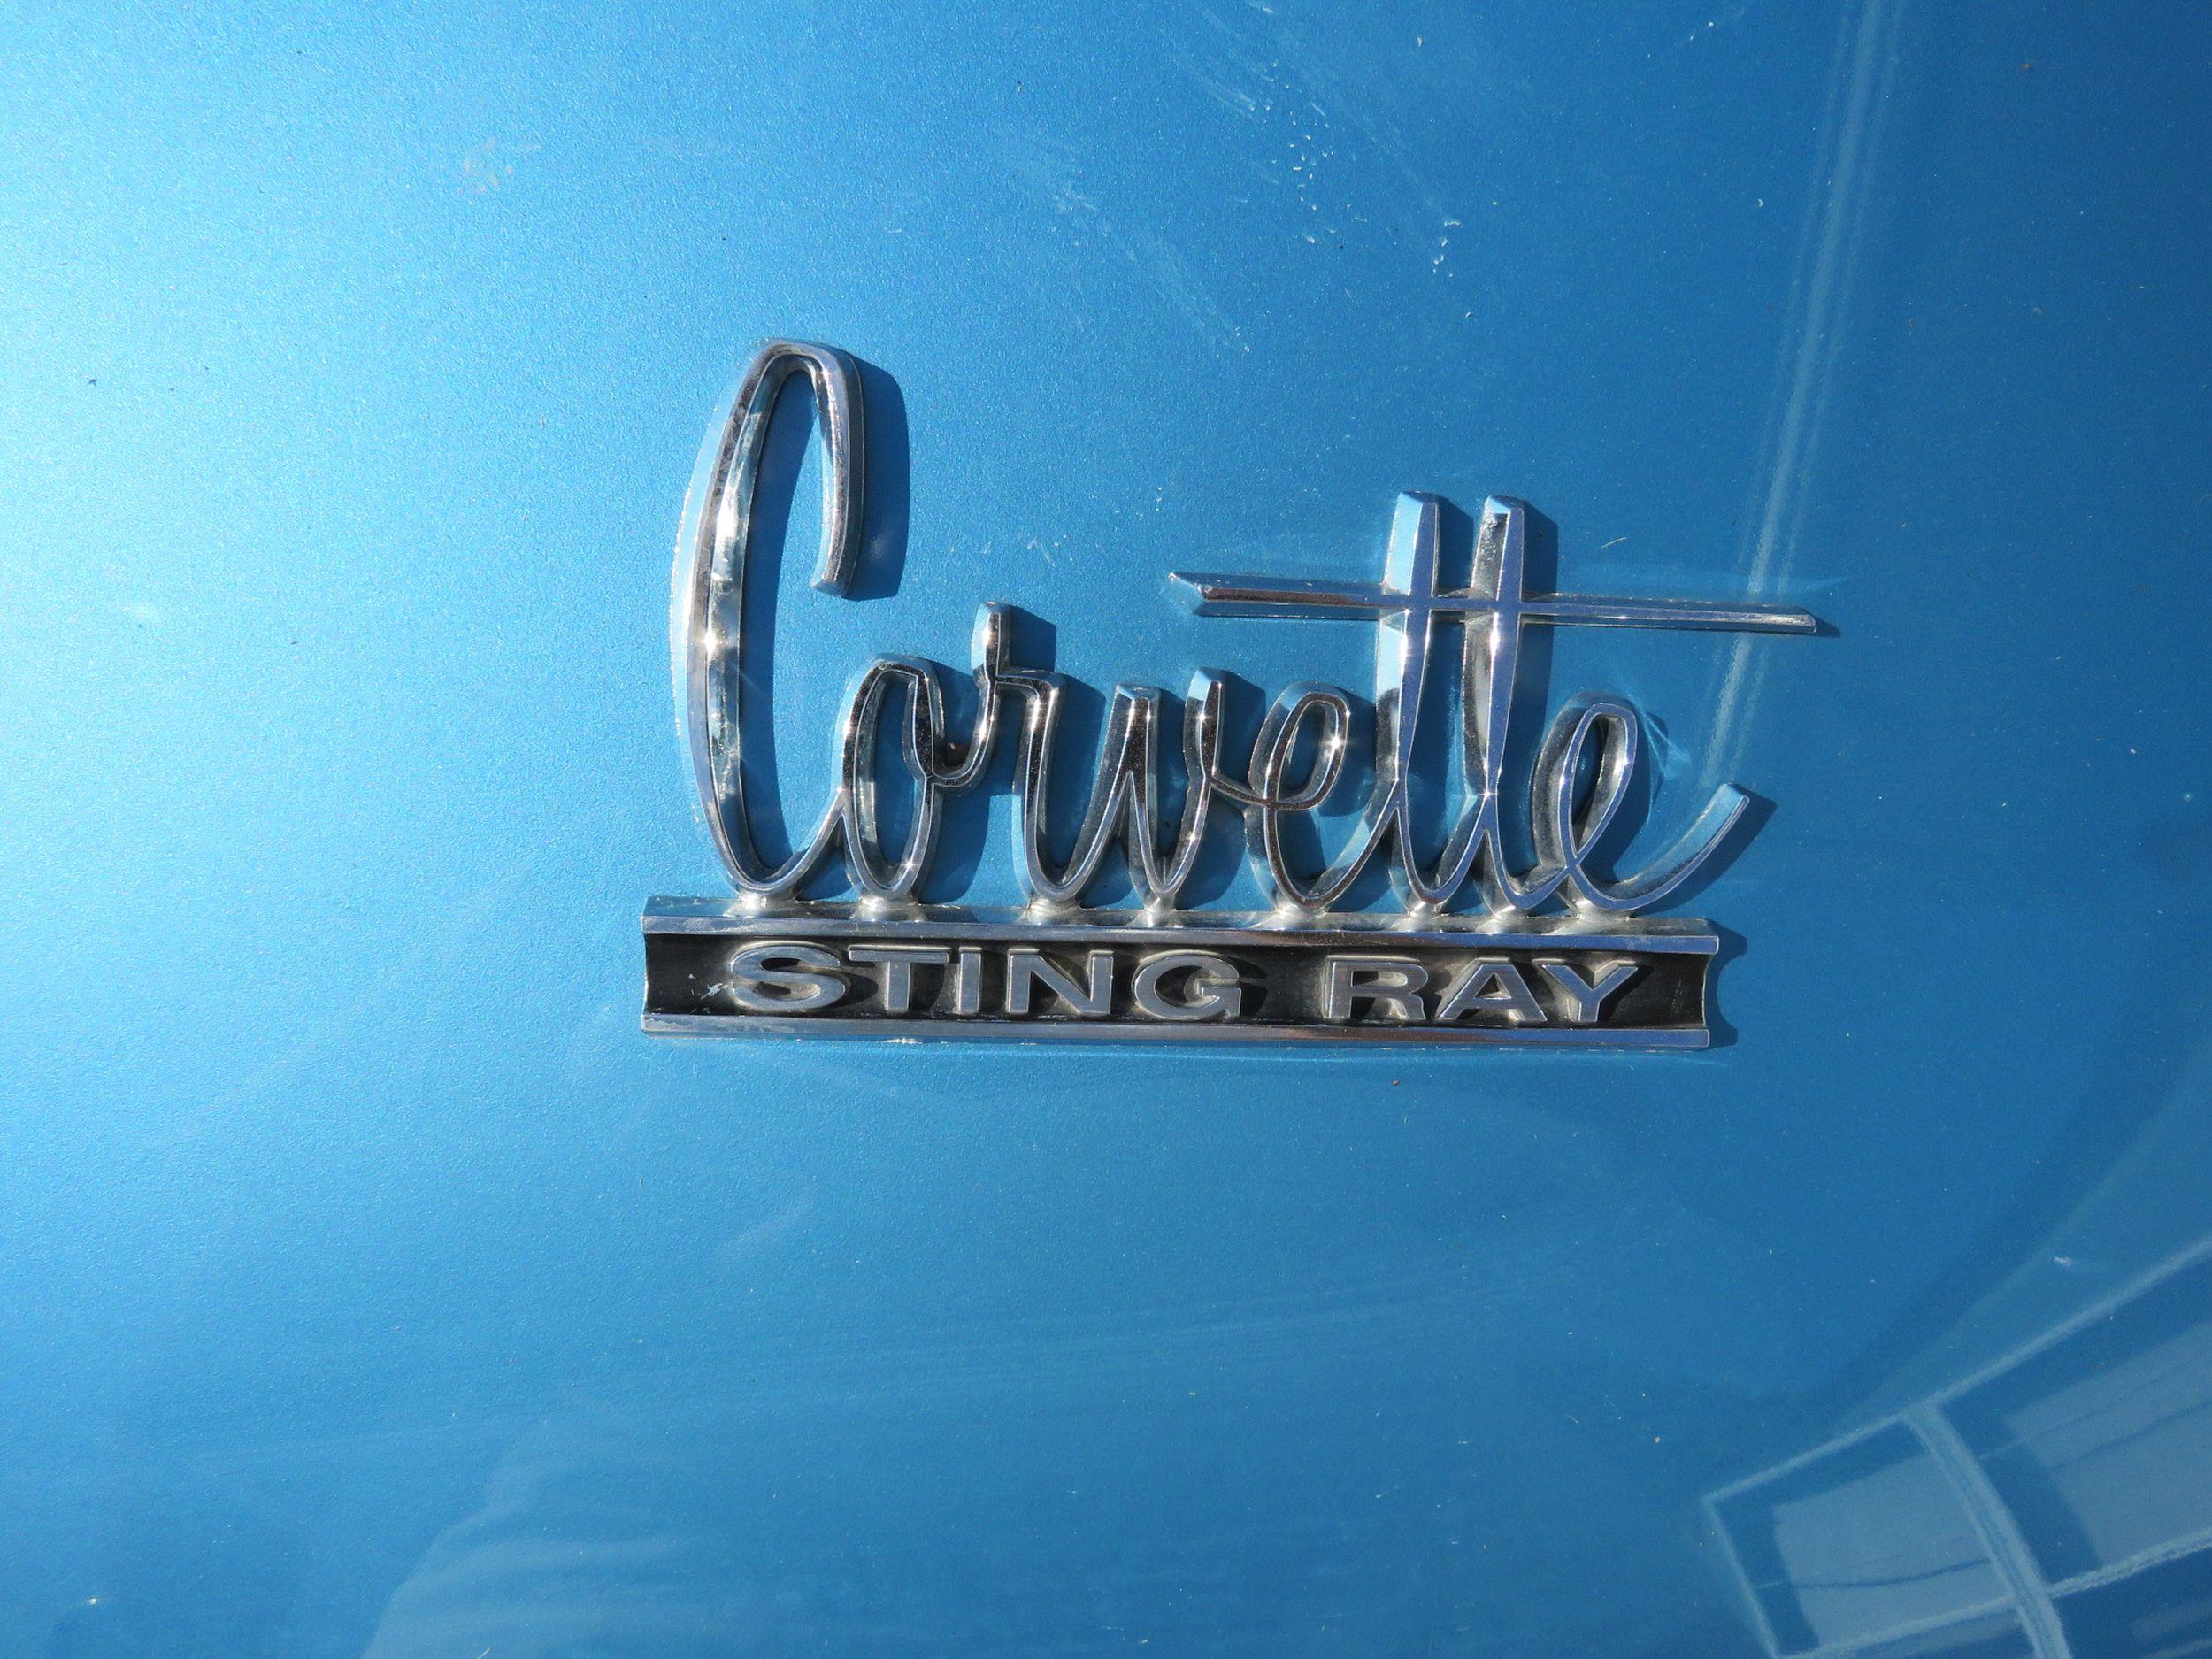 1967 Chevrolet Corvette Stingray Coupe